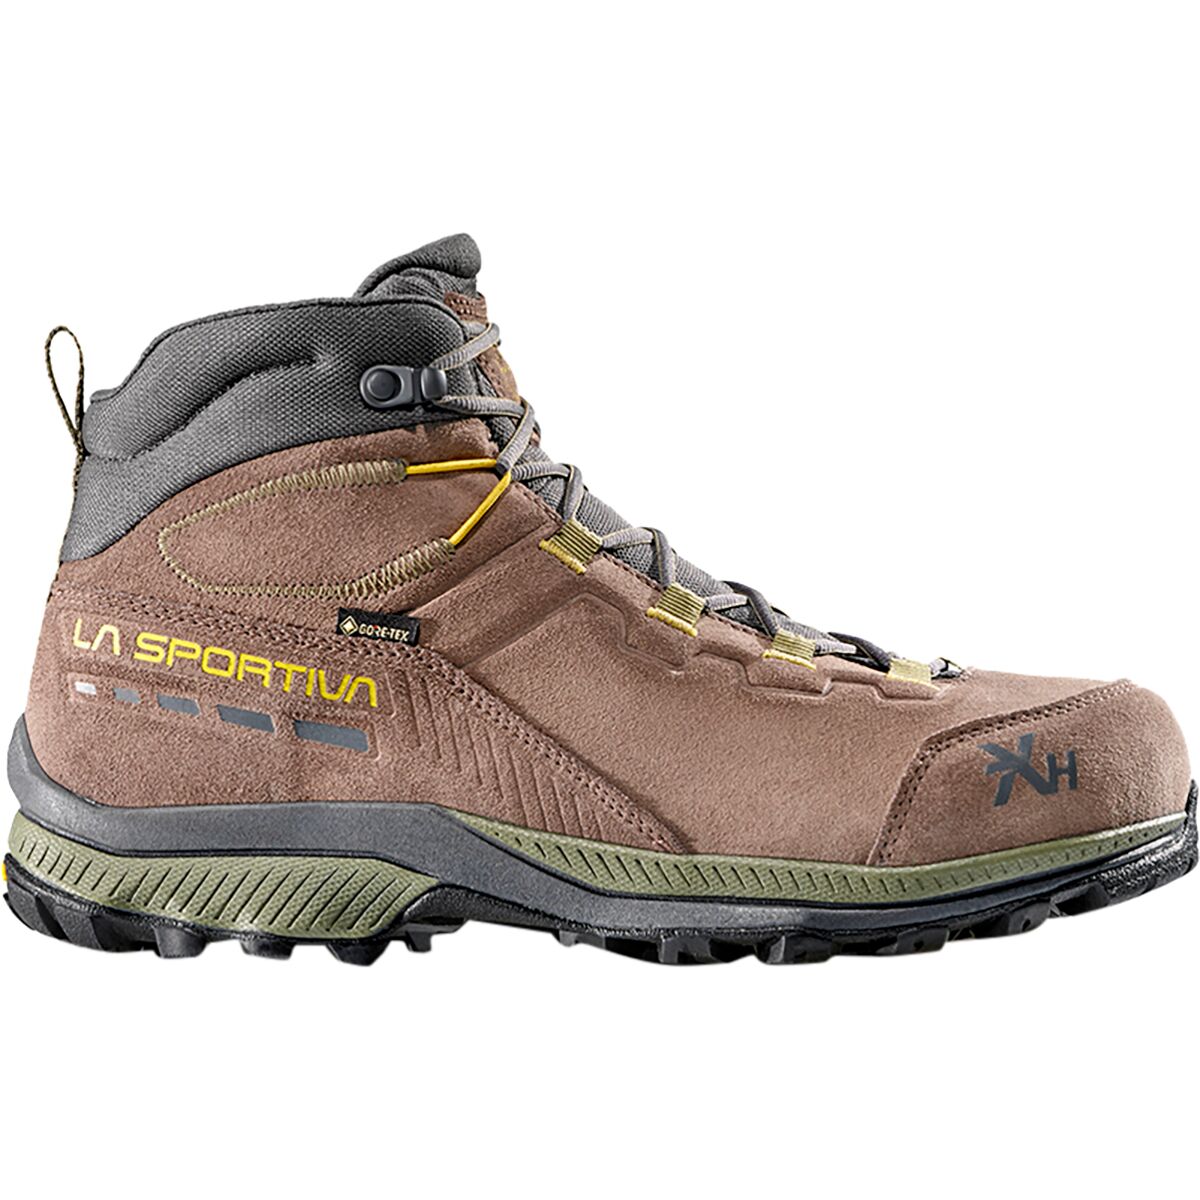 La Sportiva TX Hike Mid Leather GTX Hiking Boot - Men's